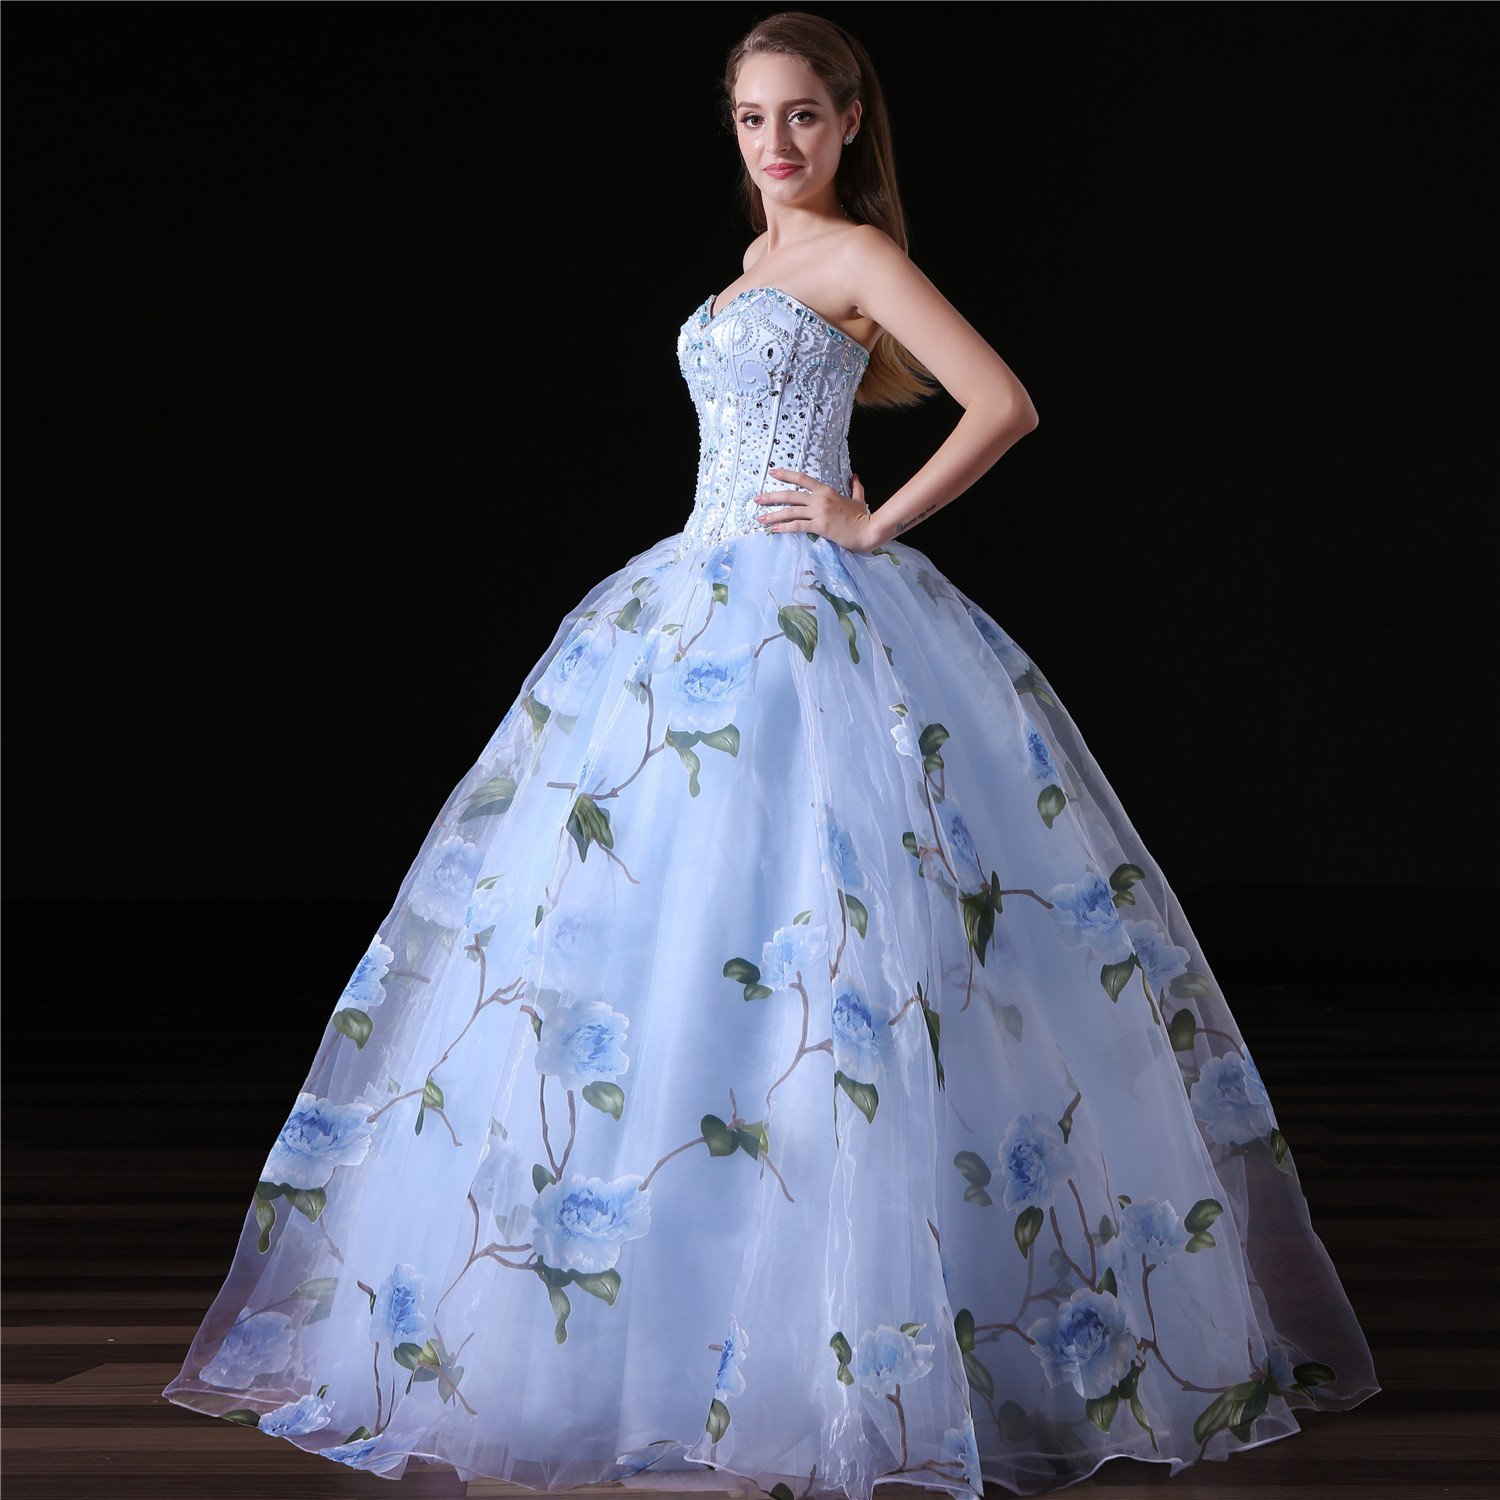 girls blue prom dress